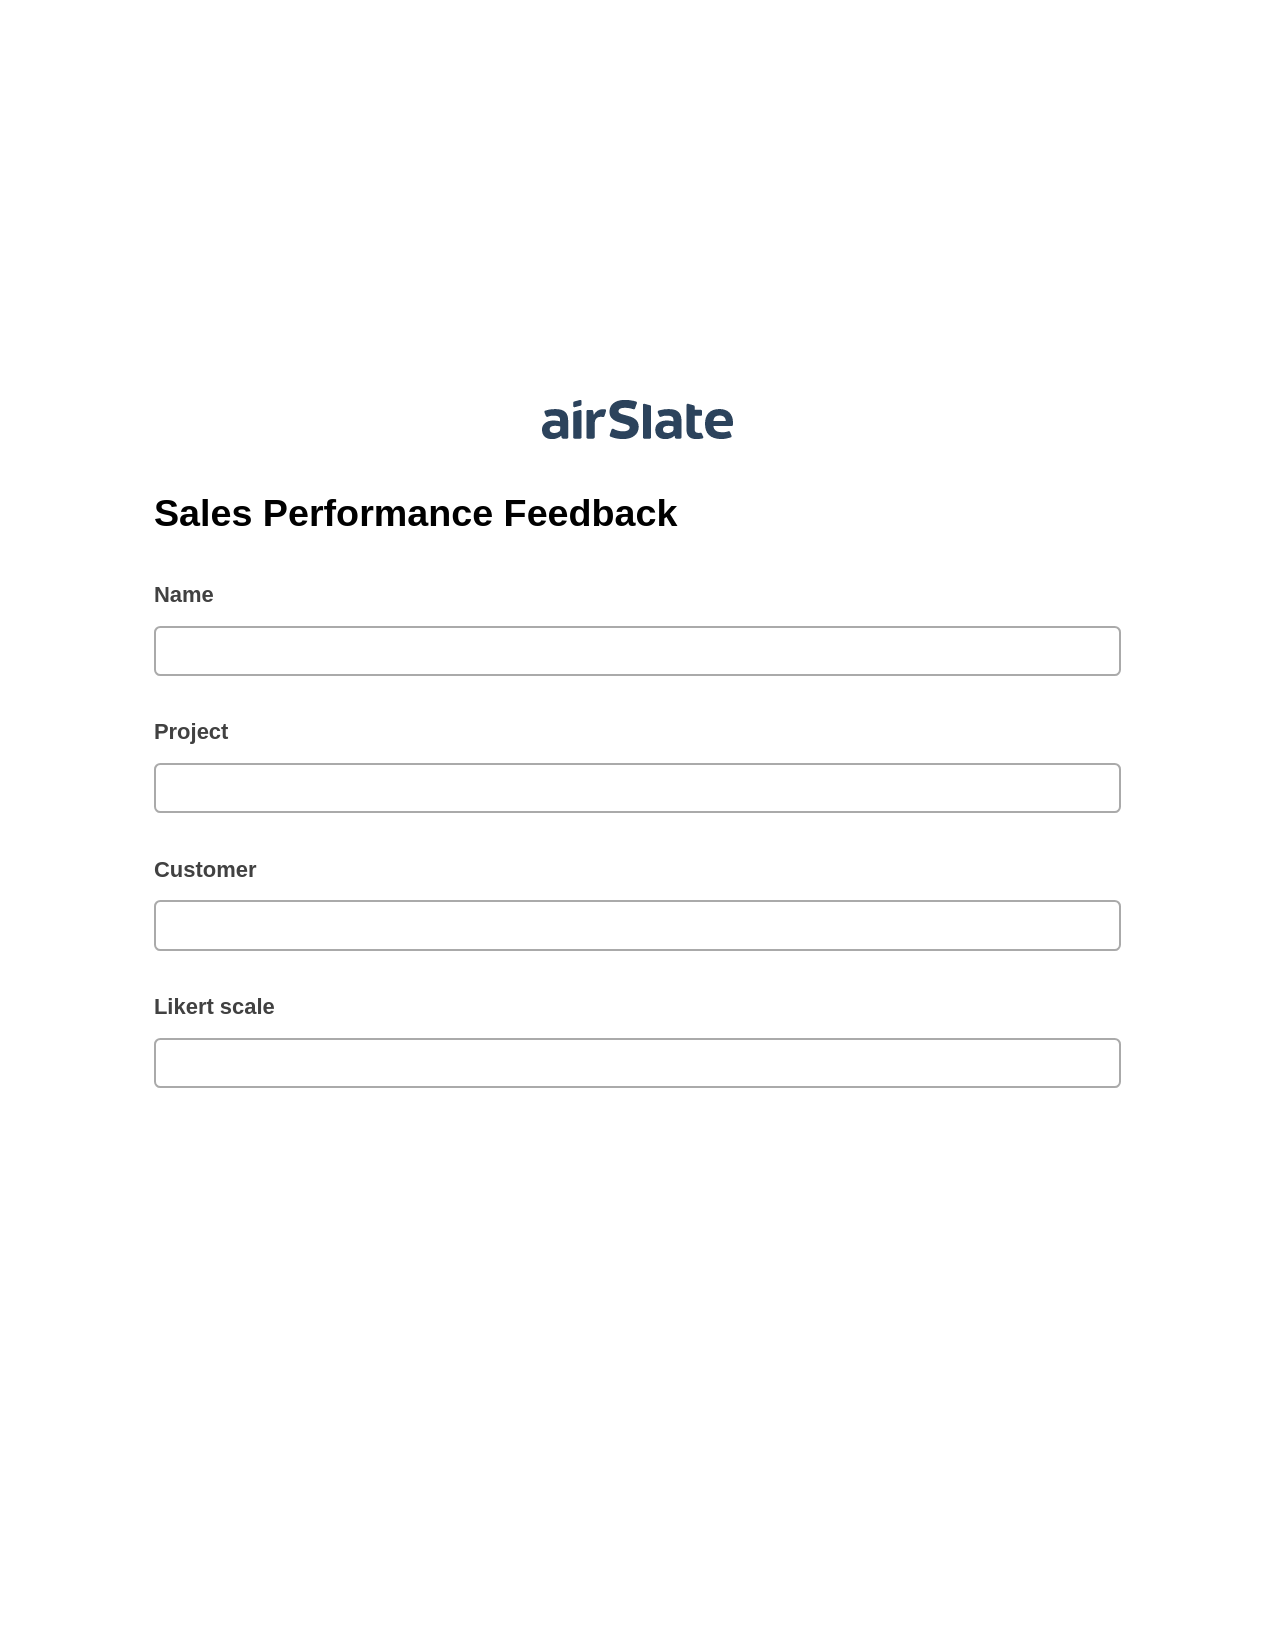 Sales Performance Feedback Pre-fill Document Bot, Audit Trail Bot, Webhook Postfinish Bot